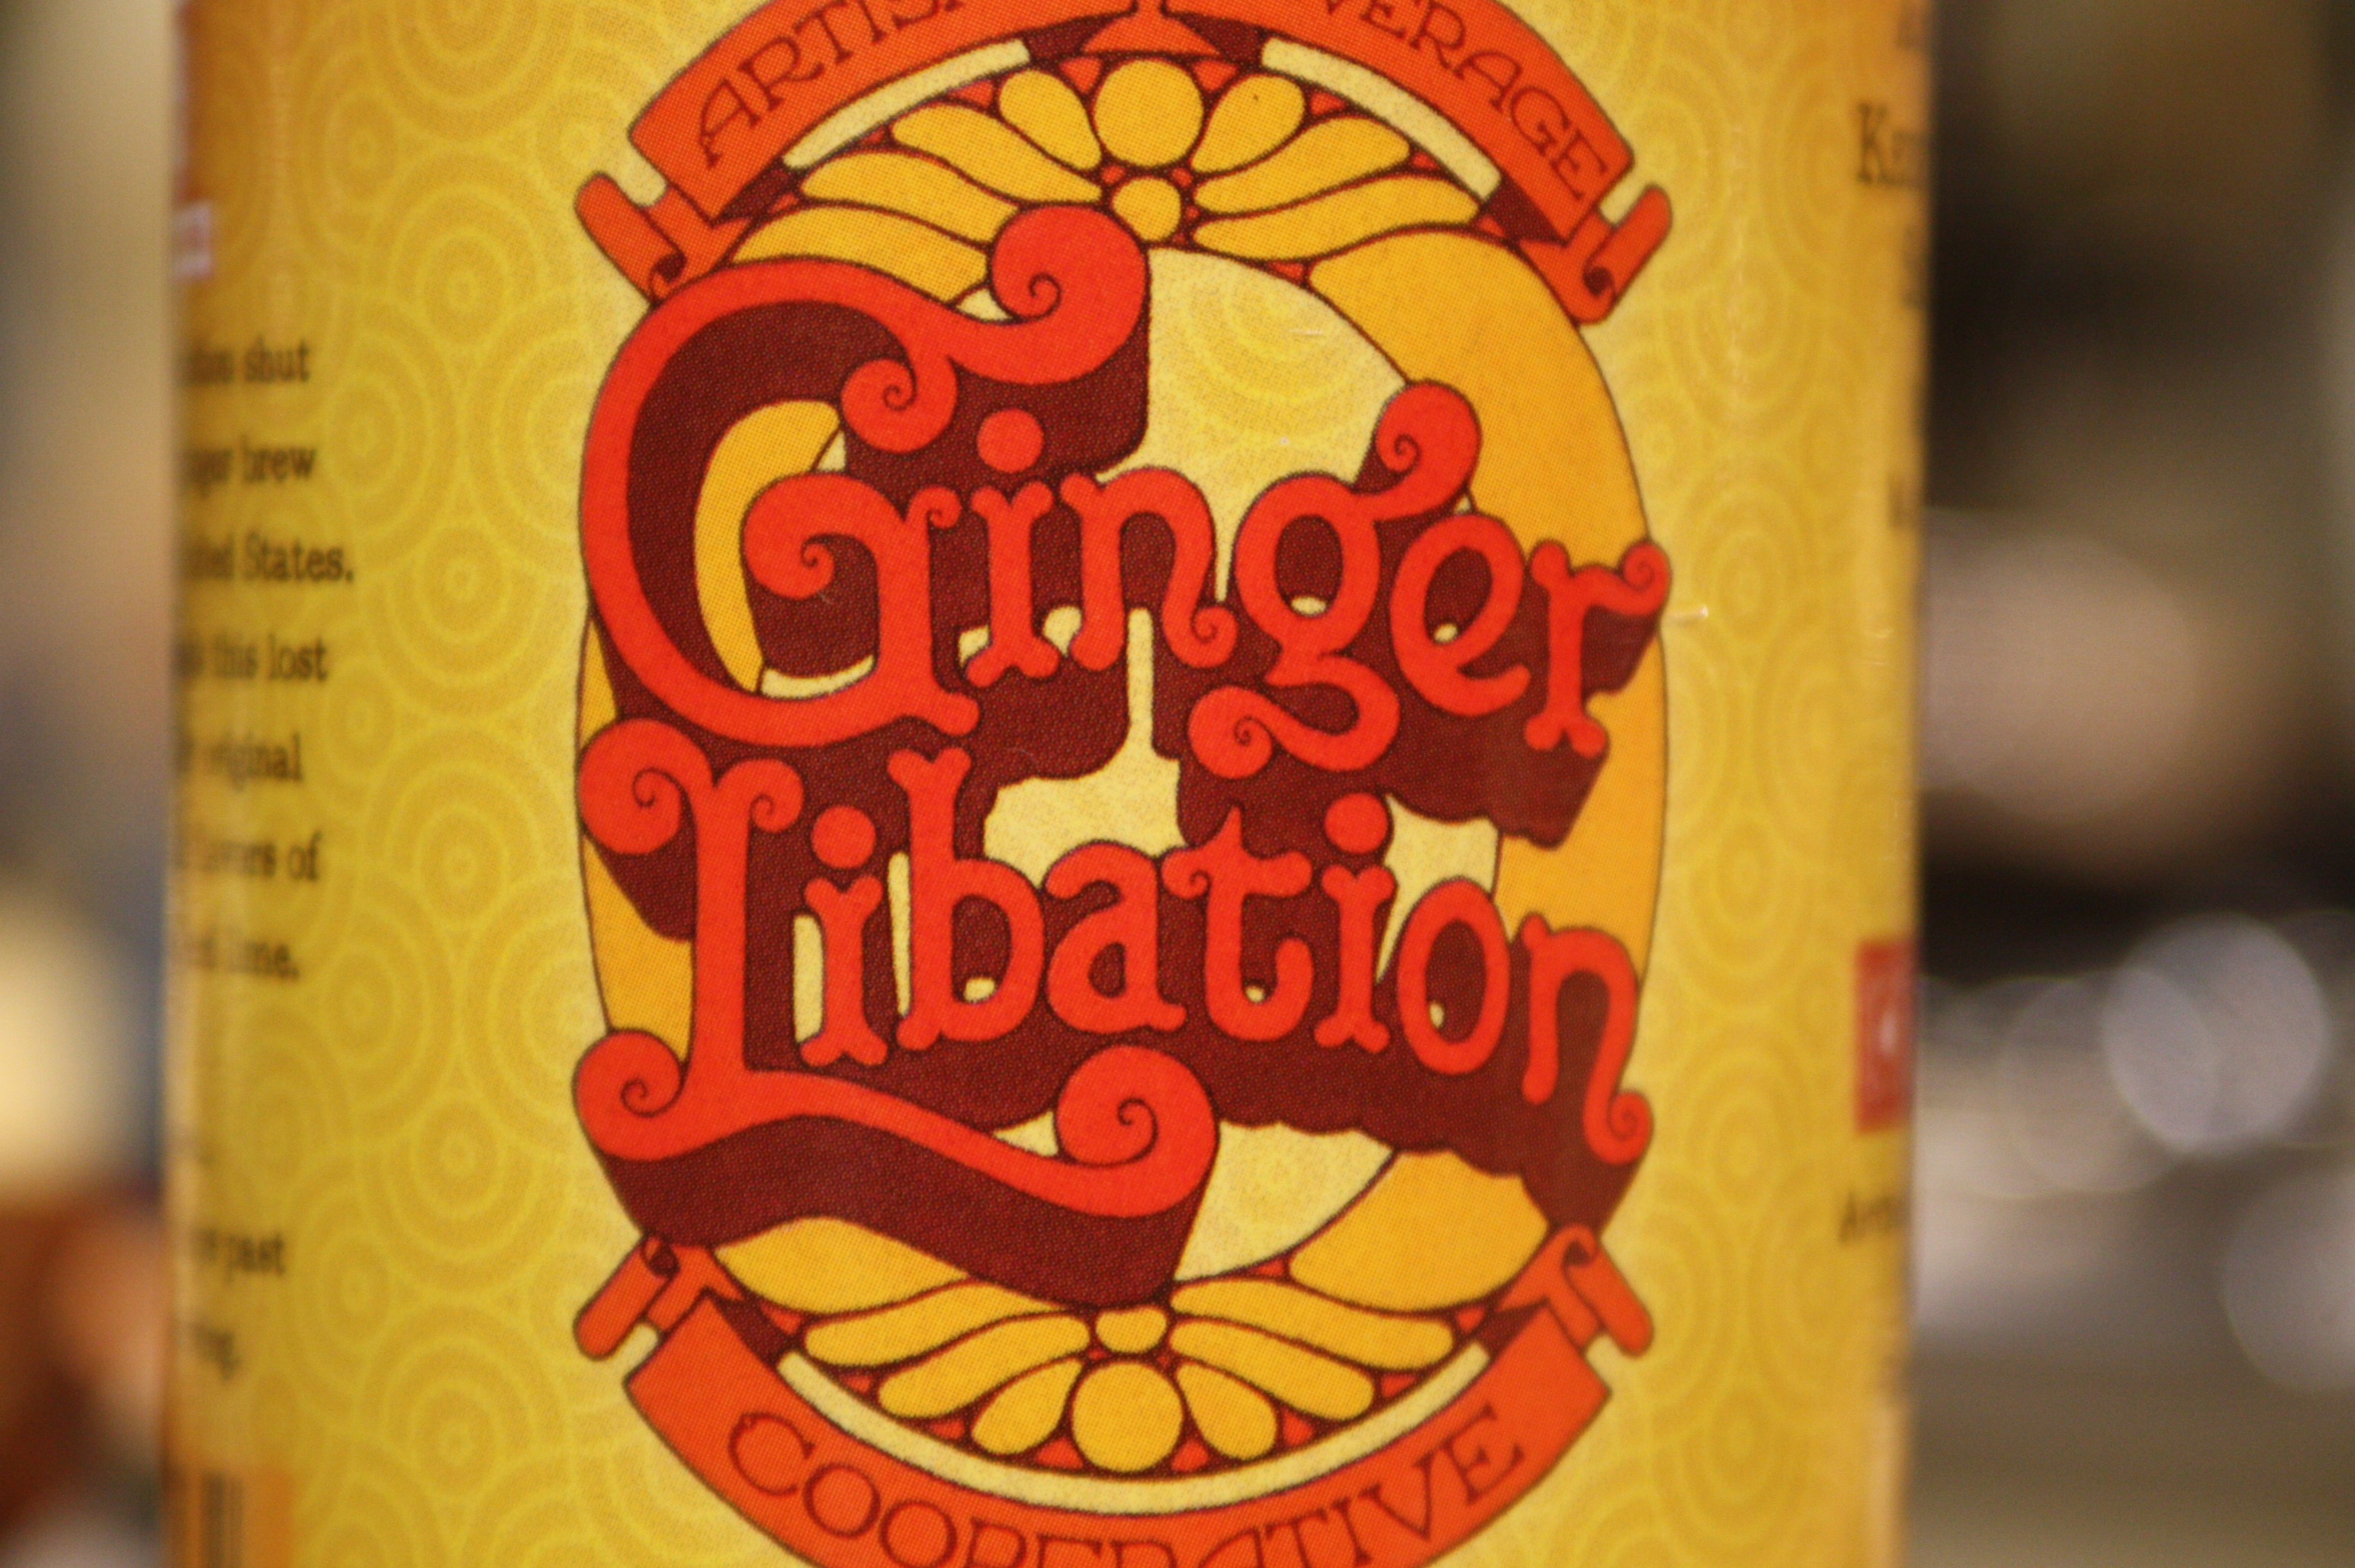 Ginger Libation